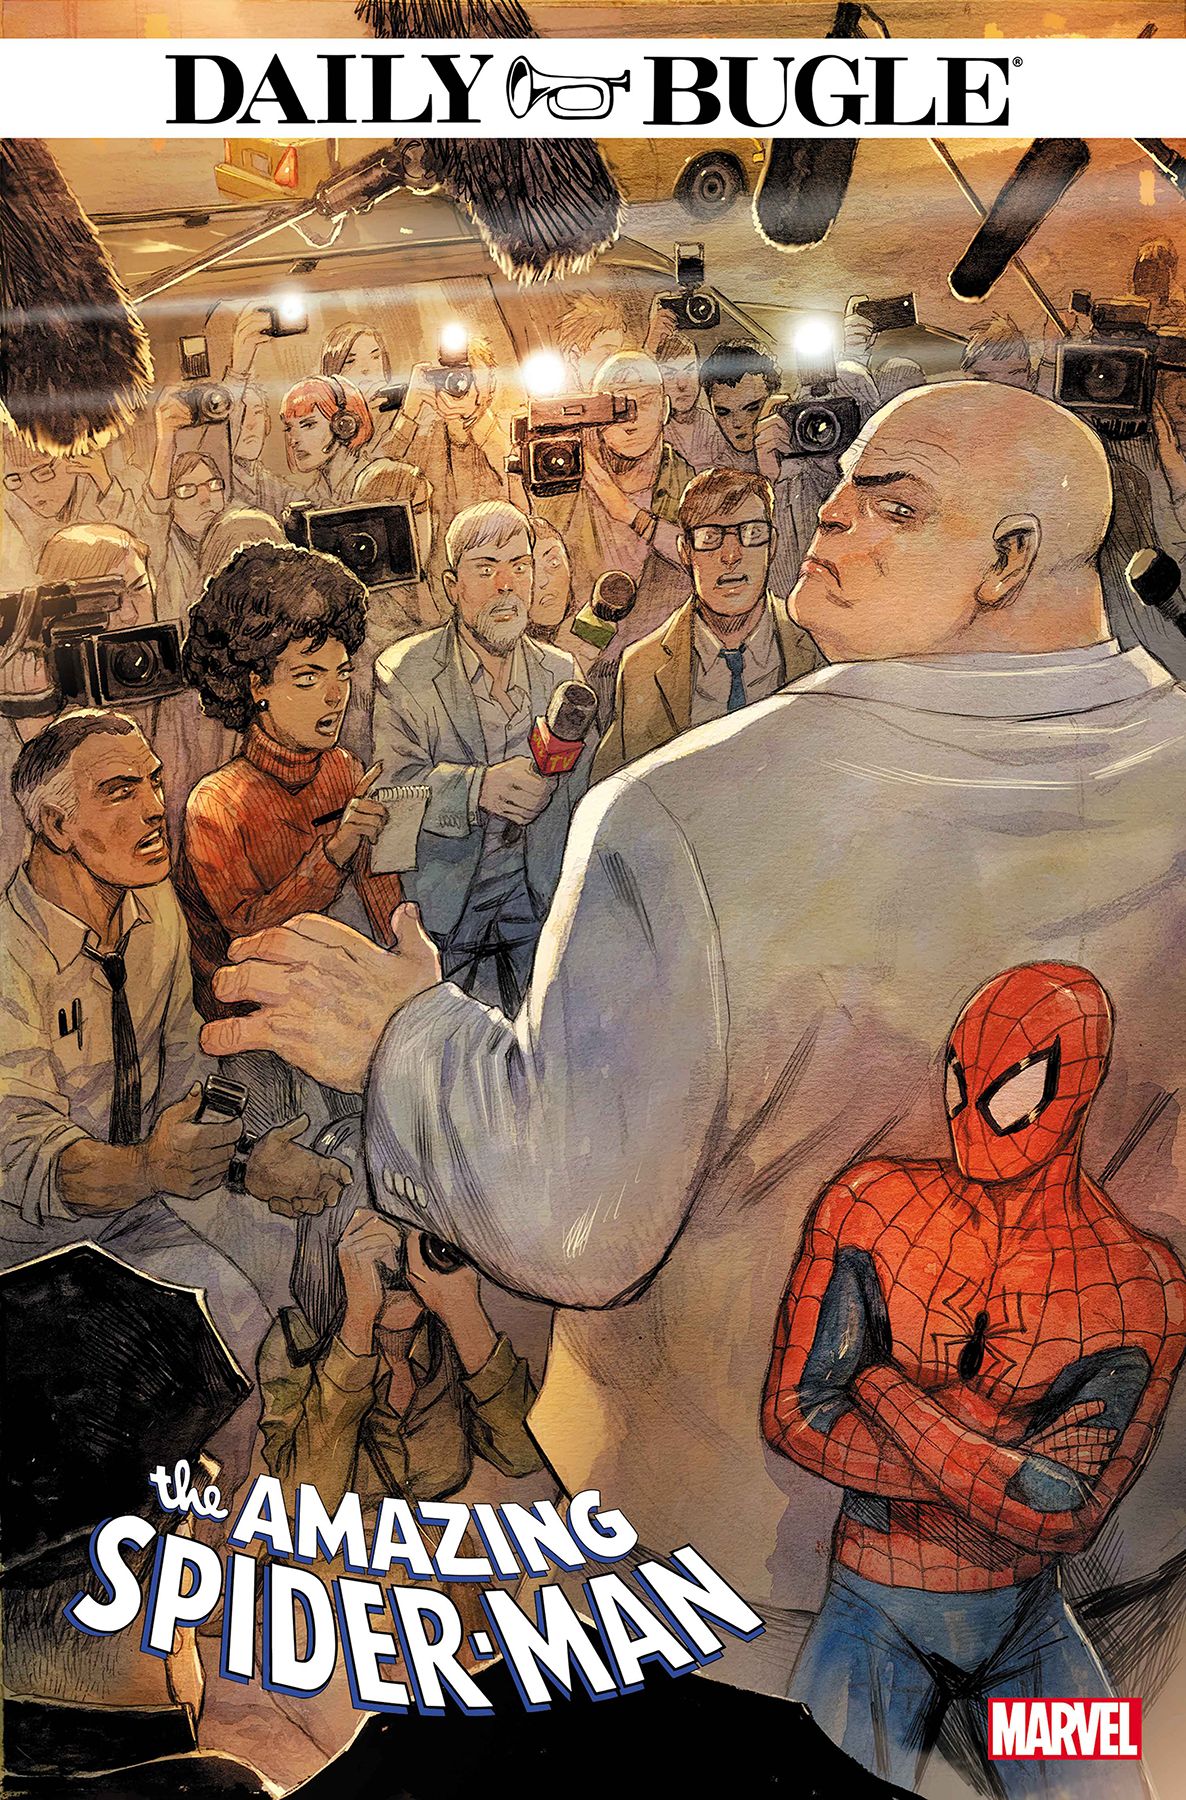 Amazing Spider-Man: Daily Bugle #5 Comic